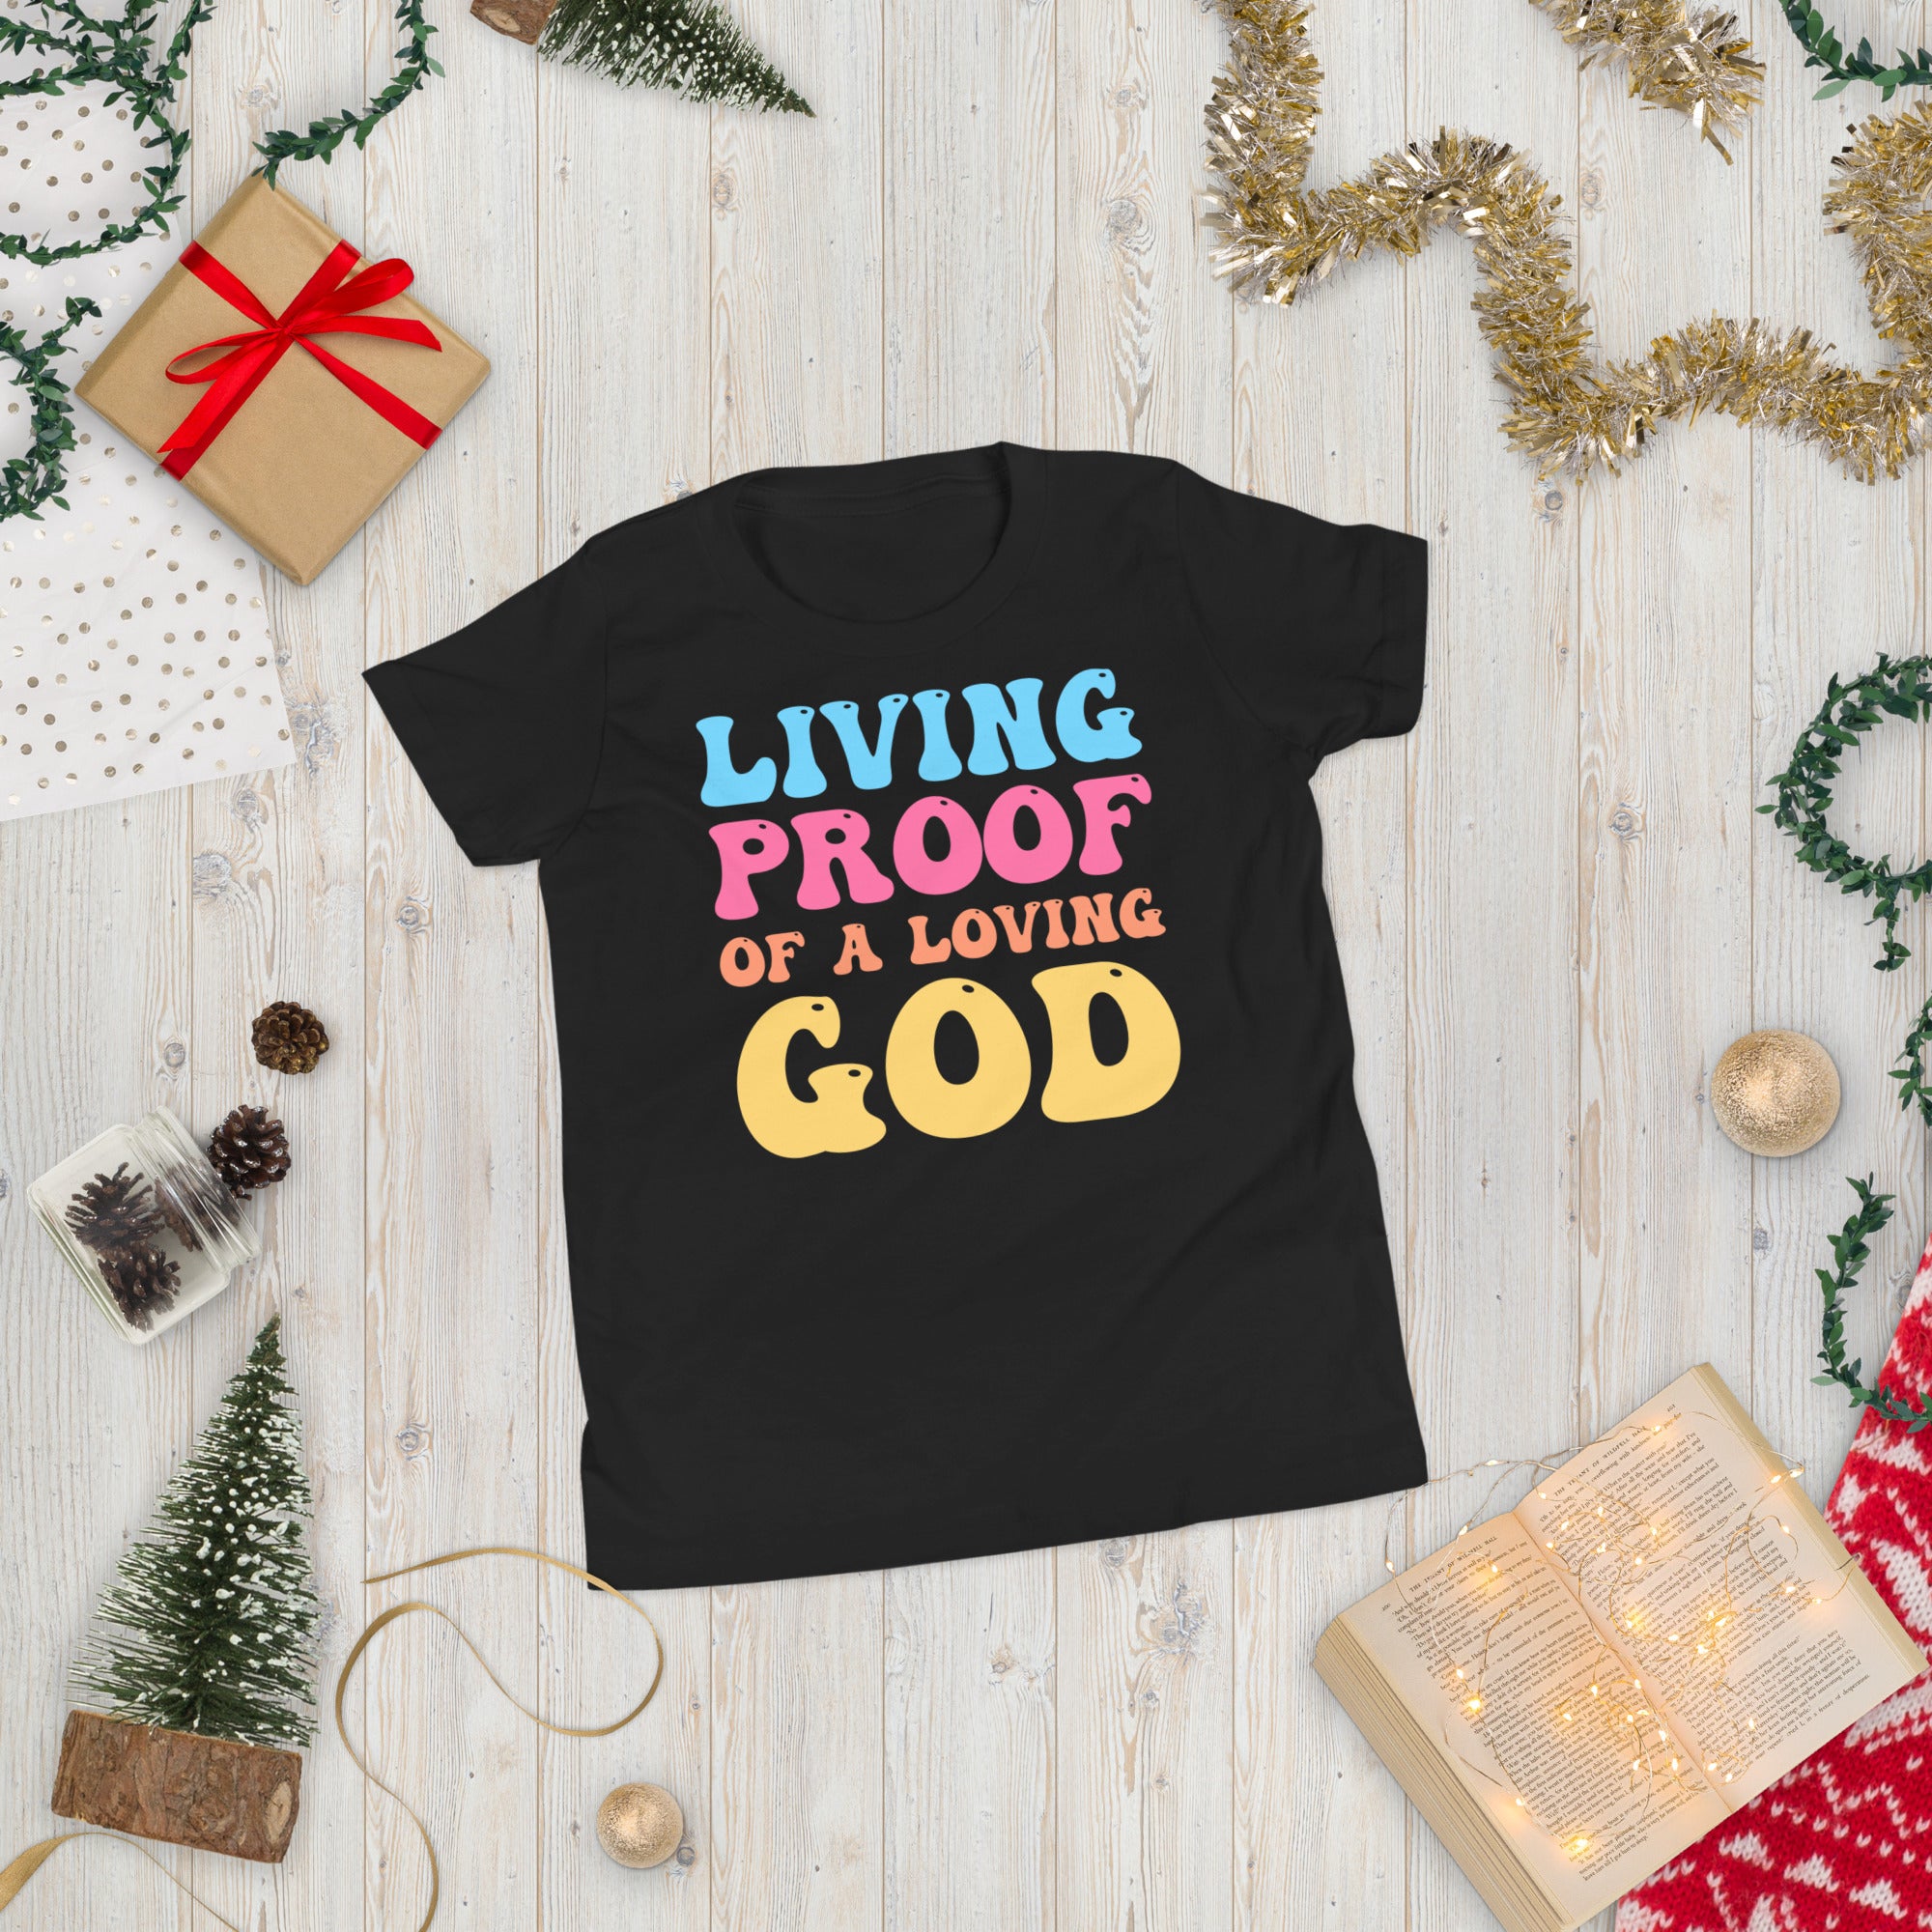 Living Proof Of A Loving God Kids Shirt, Aesthetic Christian Youth TShirt, Boys Girls Religious T Shirt, Bible Verse Shirts, Christian Gift - Madeinsea©